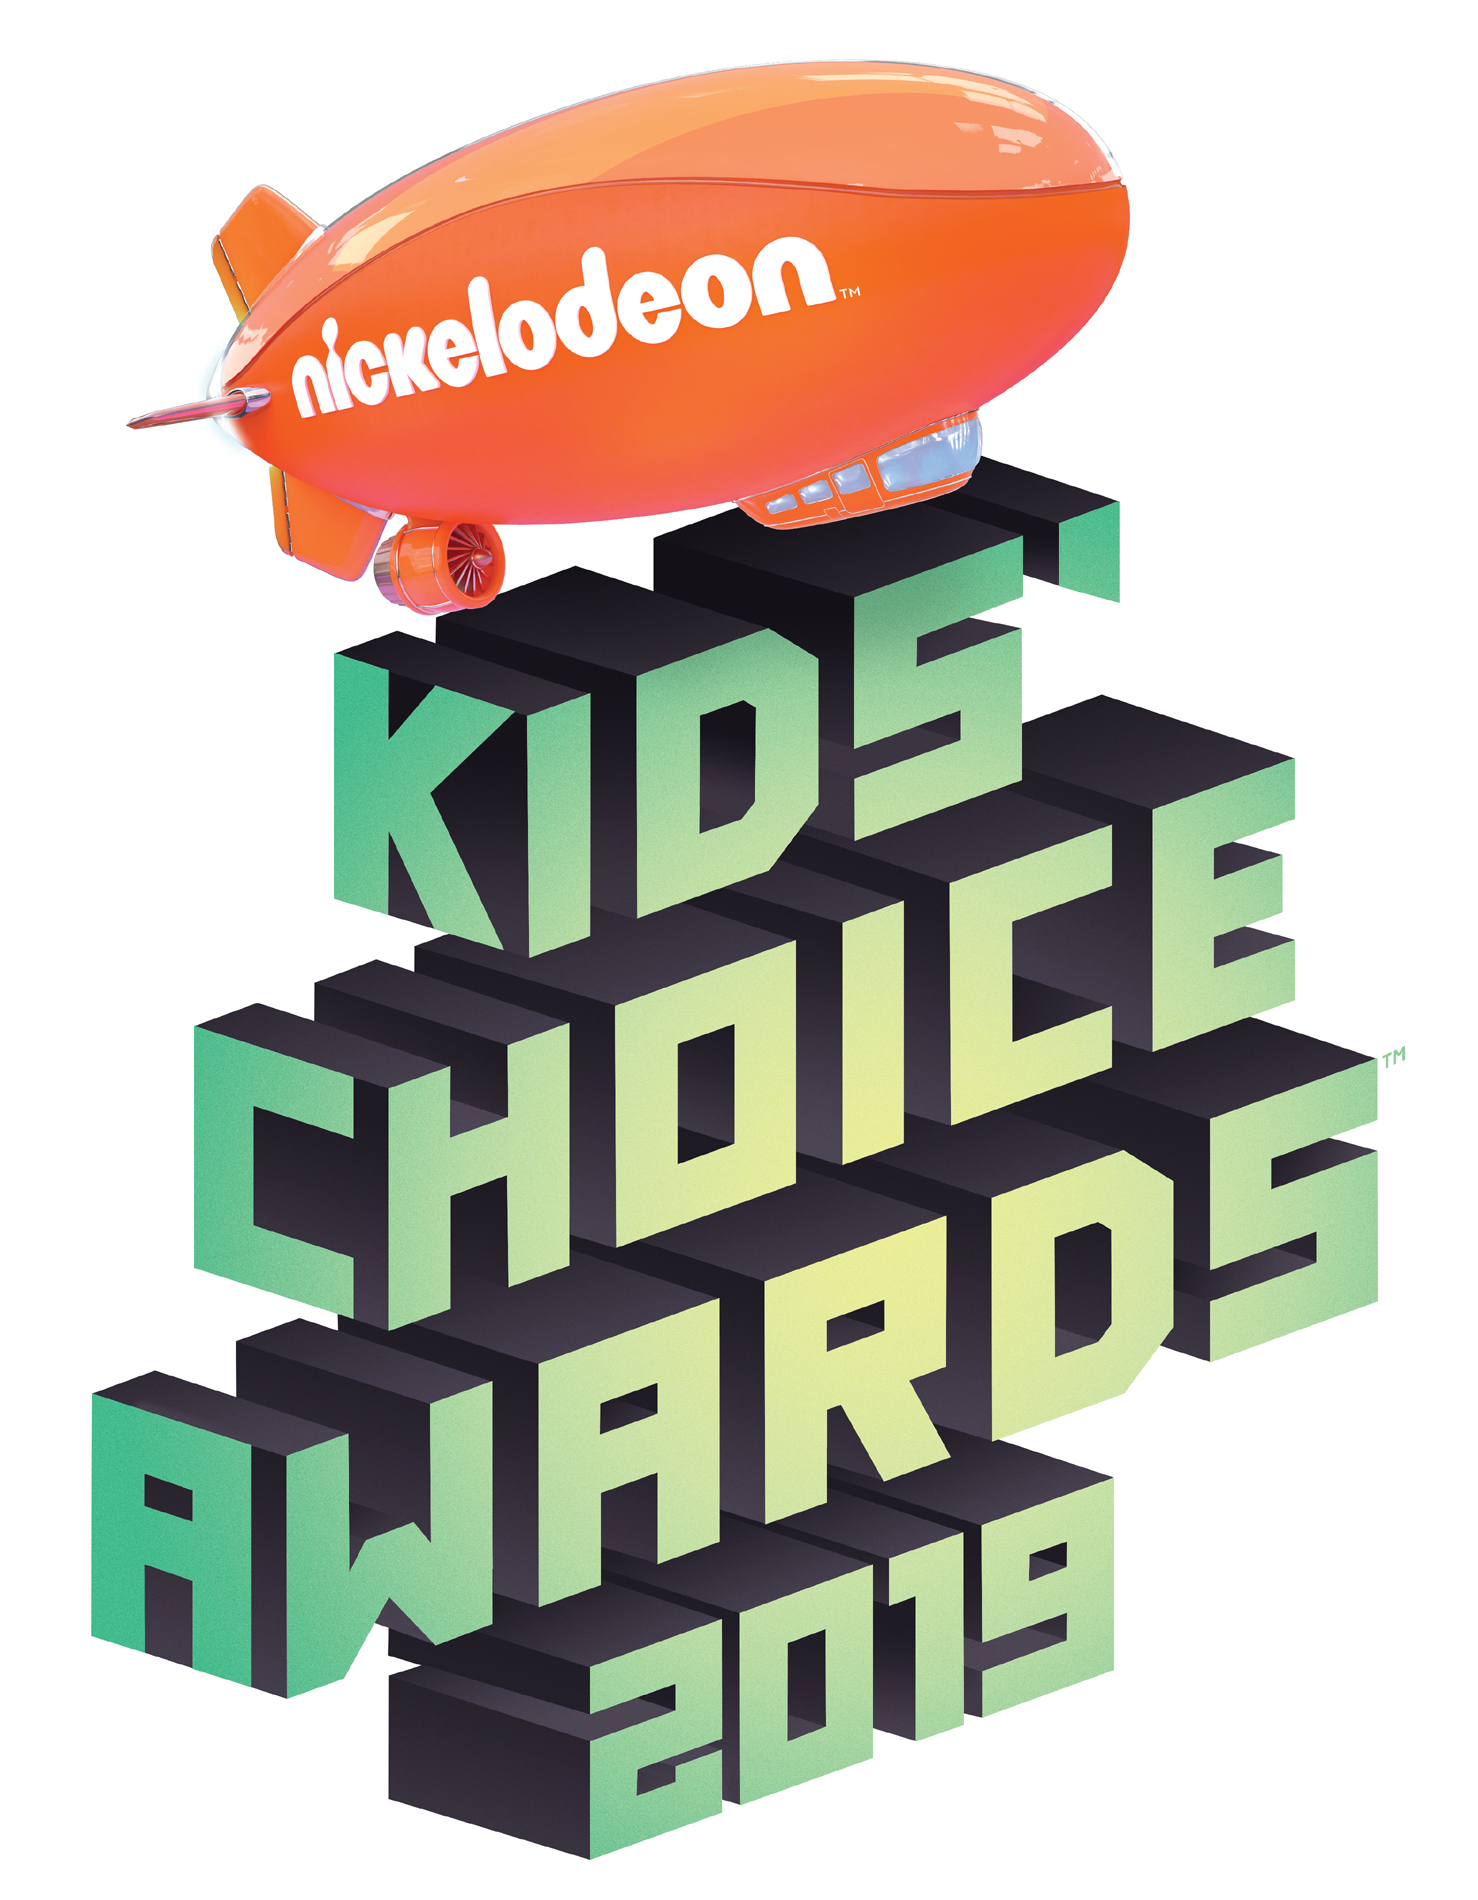 Kids Choice Awards 2019